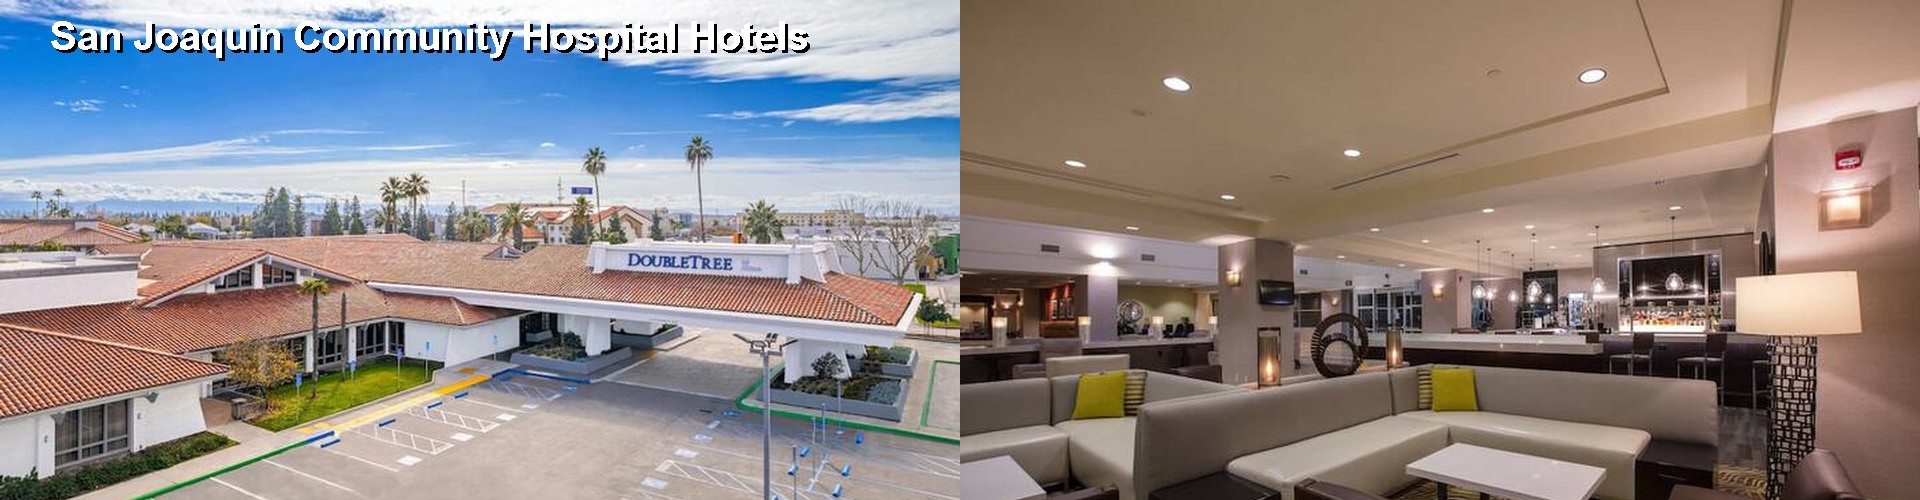 5 Best Hotels near San Joaquin Community Hospital